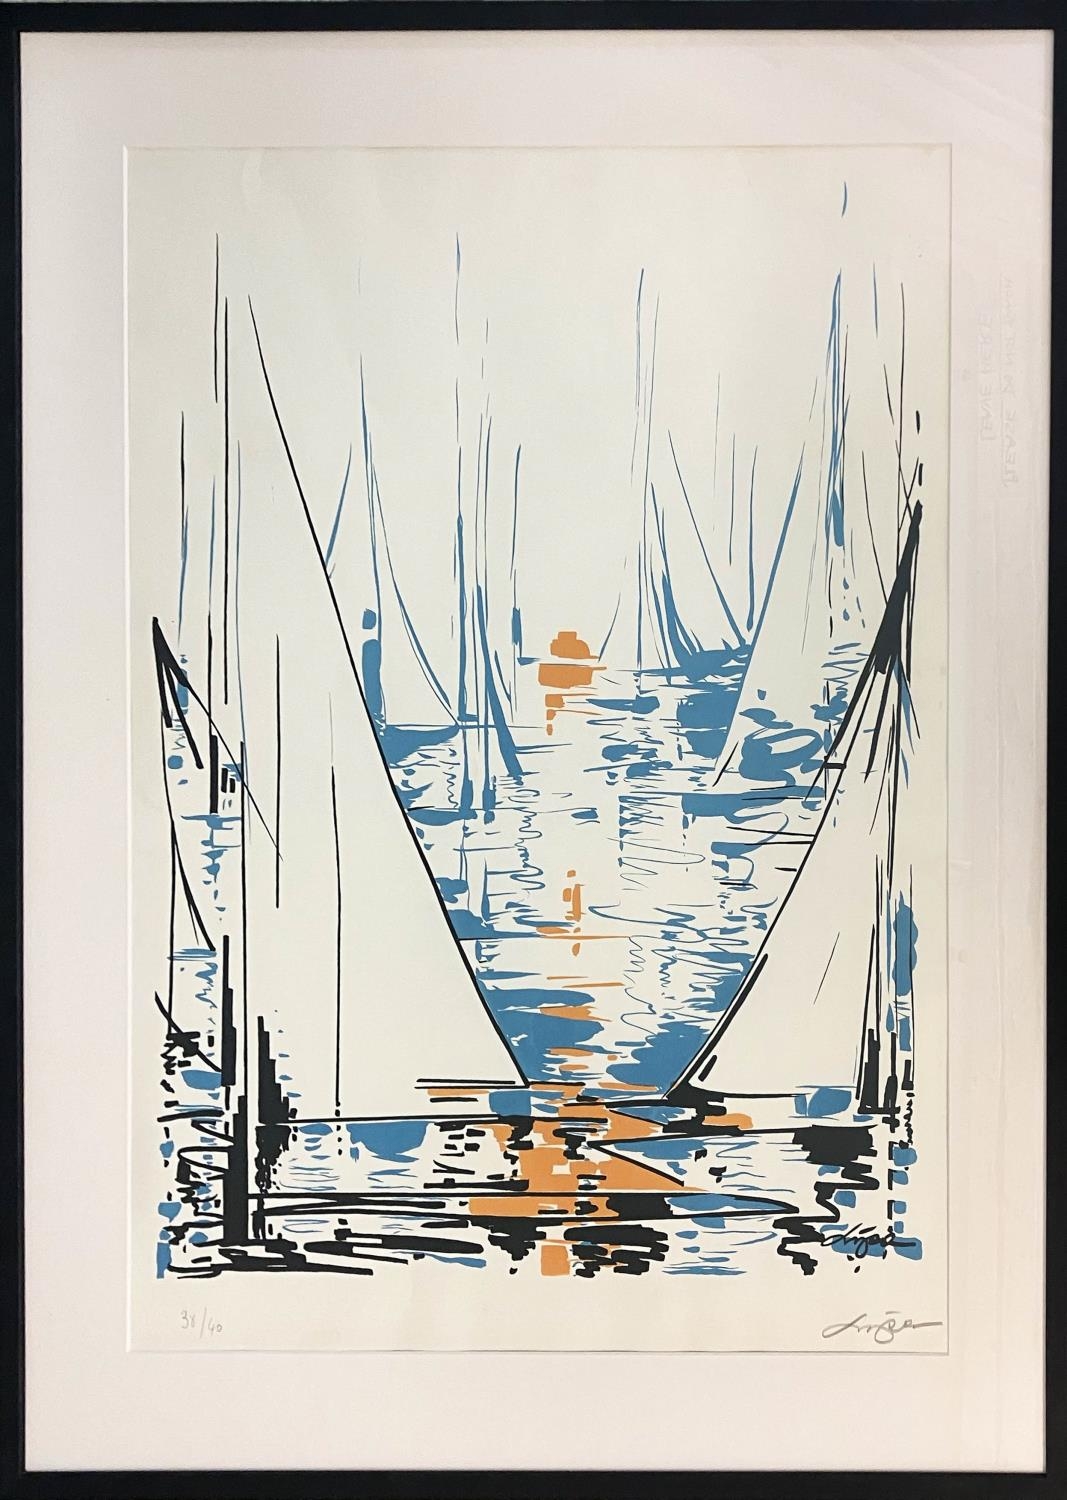 JORGE, 'Yachts', screenprint, 71cm x 53cm, framed.